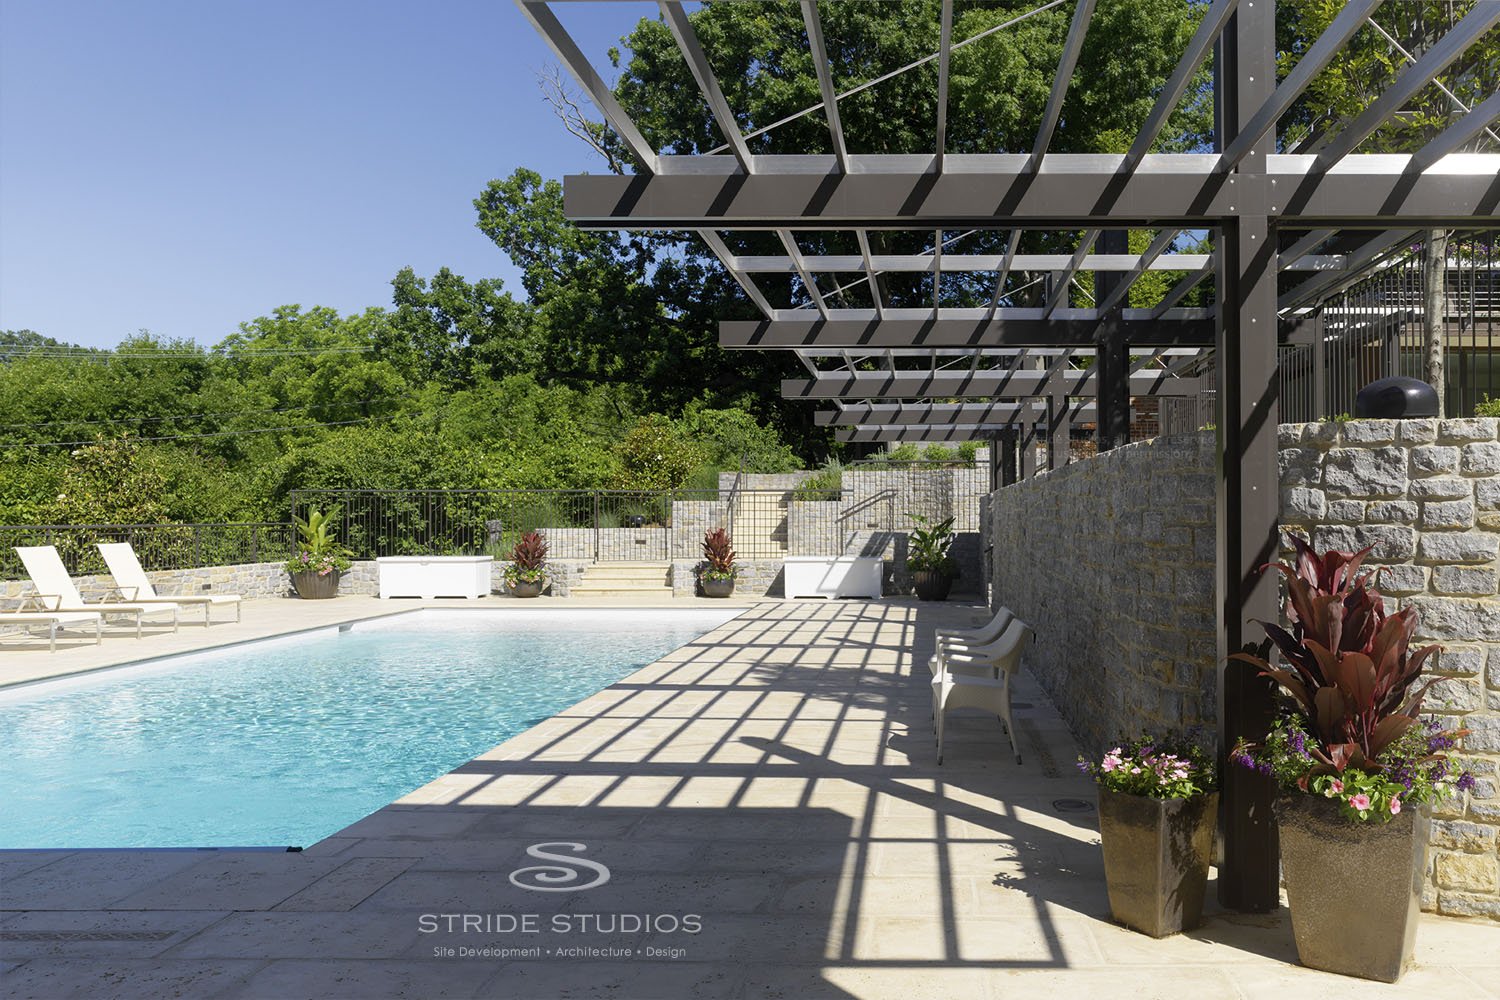 23-sps-stride-studios-swimming-pool-aluminum-arbor.jpg